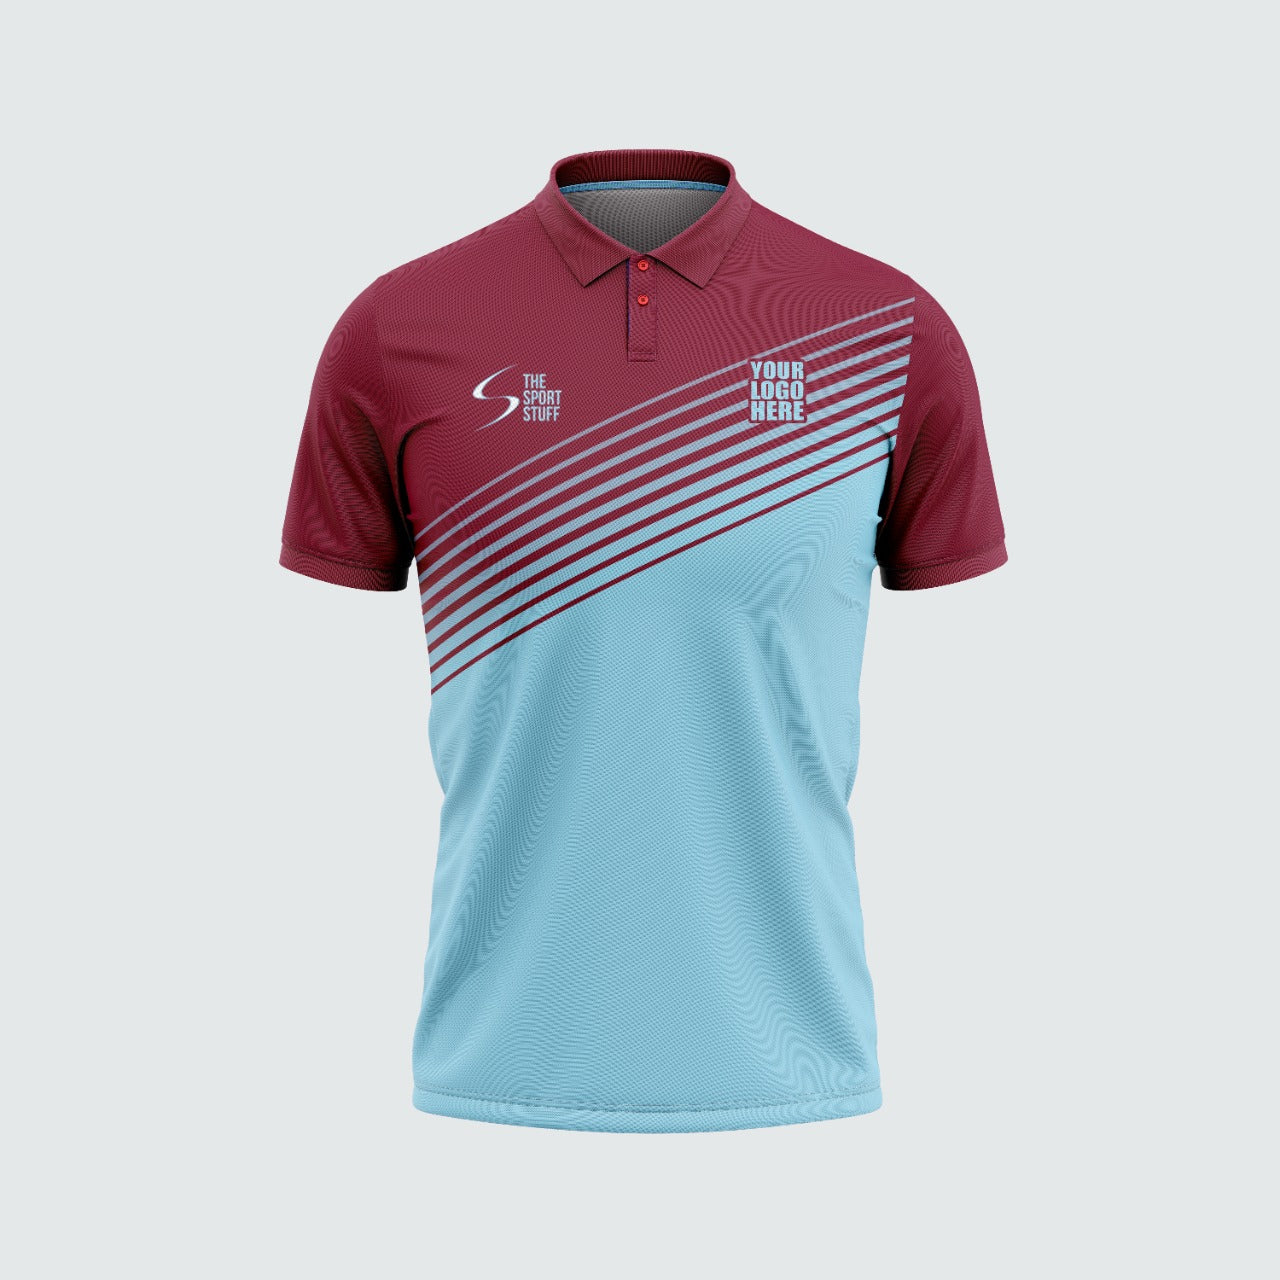 Claret And Blue Customized Cricket Team Jersey Design - TheSportStuff